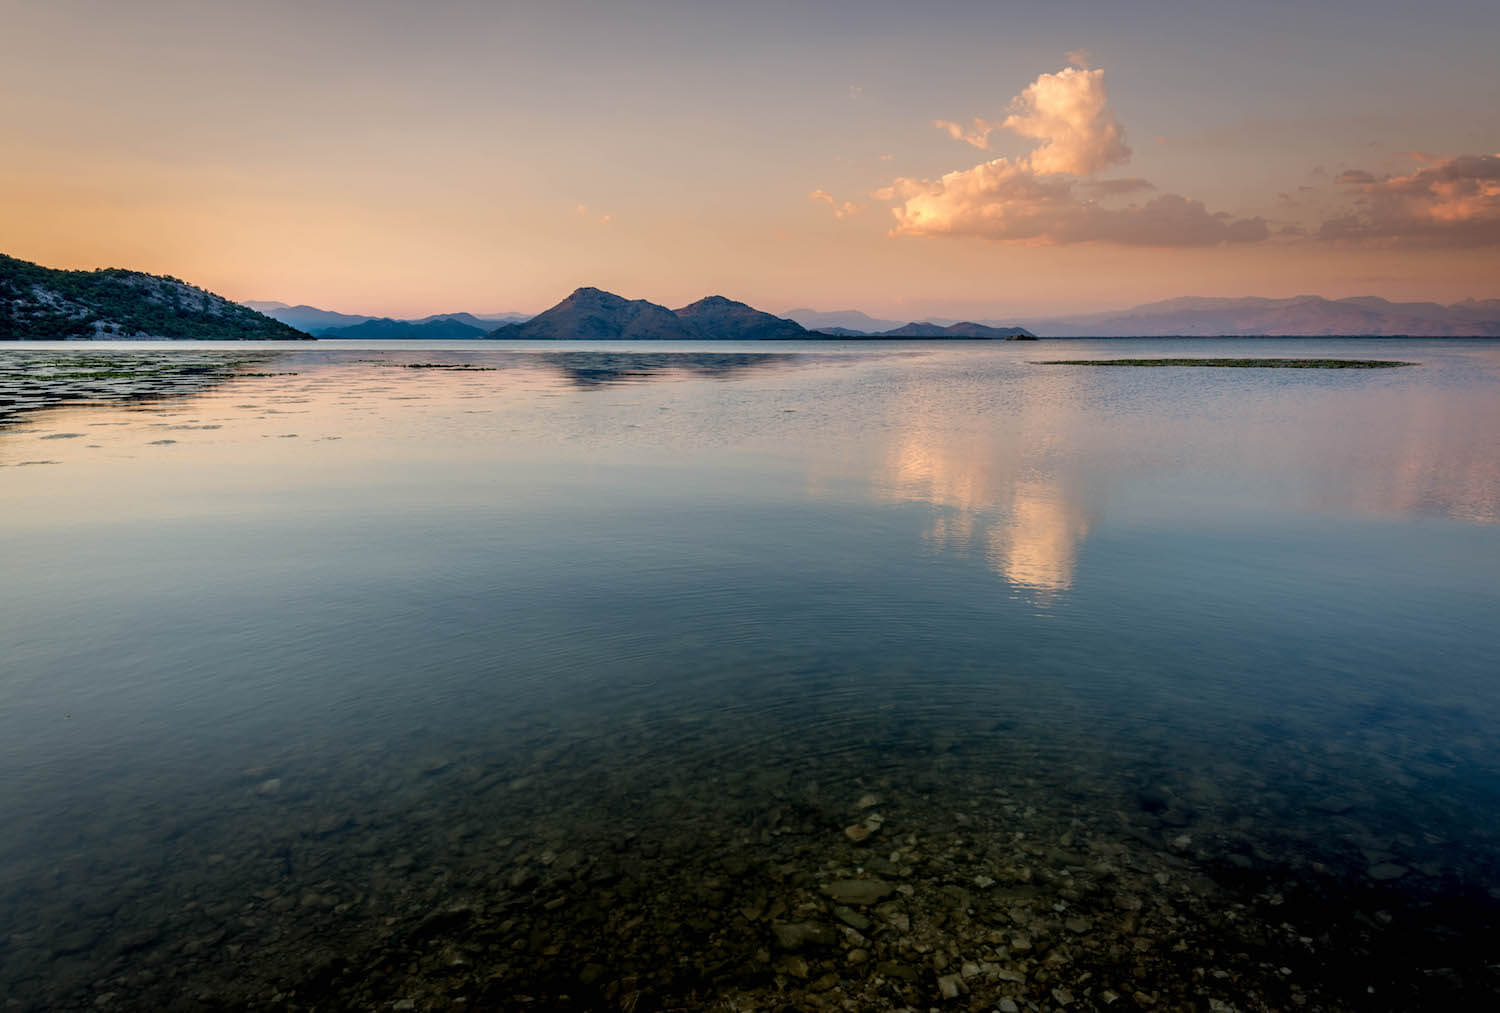 Reflections across Lake Skadar, Montenegro